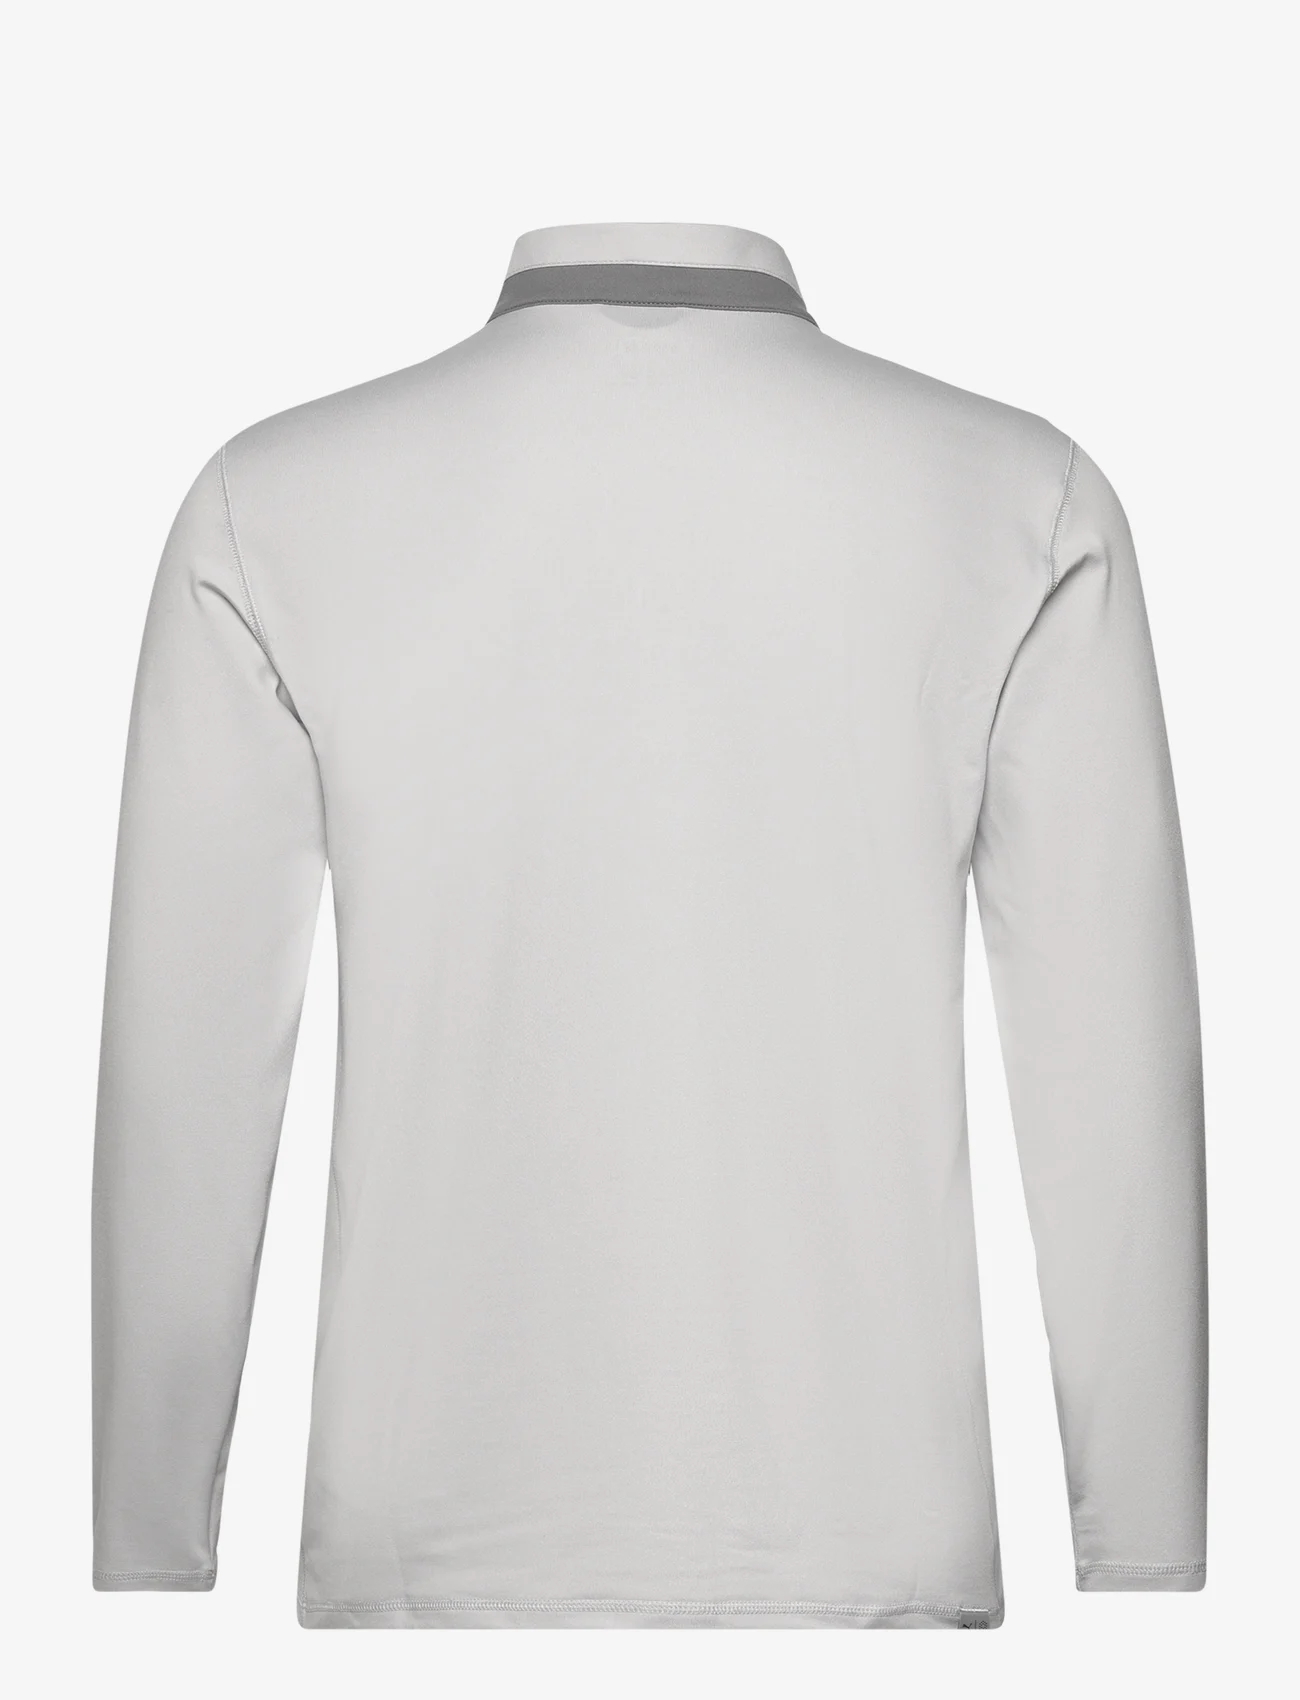 PUMA Golf - Lightweight 1/4 Zip - mid layer jackets - ash gray-slate sky - 1